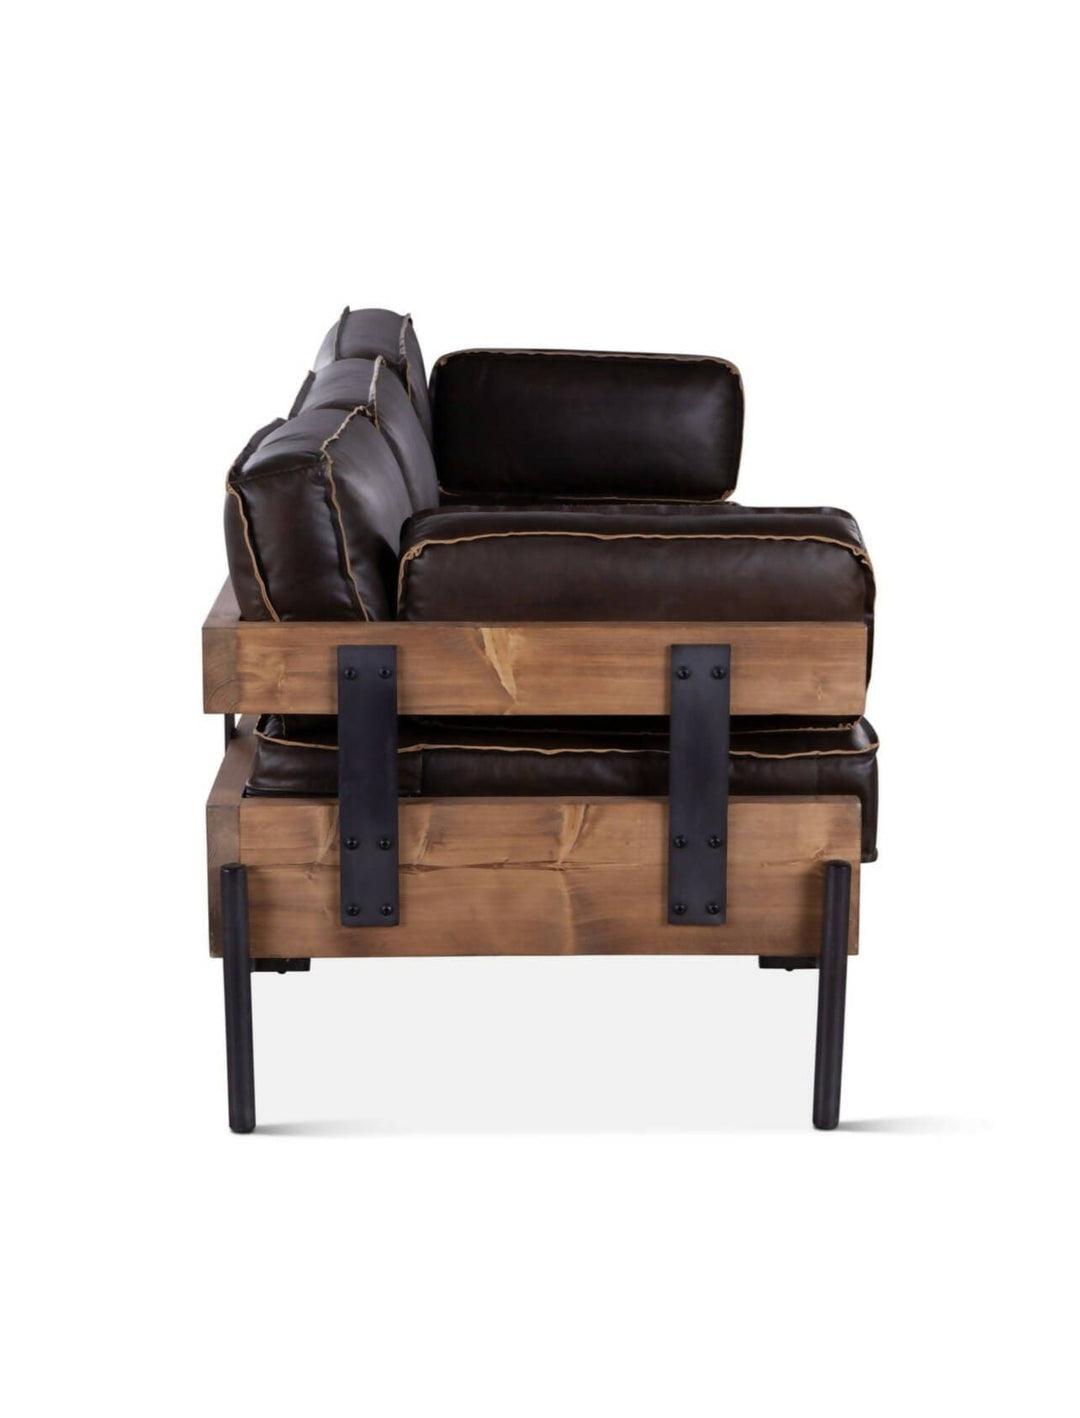 Portofinio 82” Brown Leather Sofa America Reclaimed